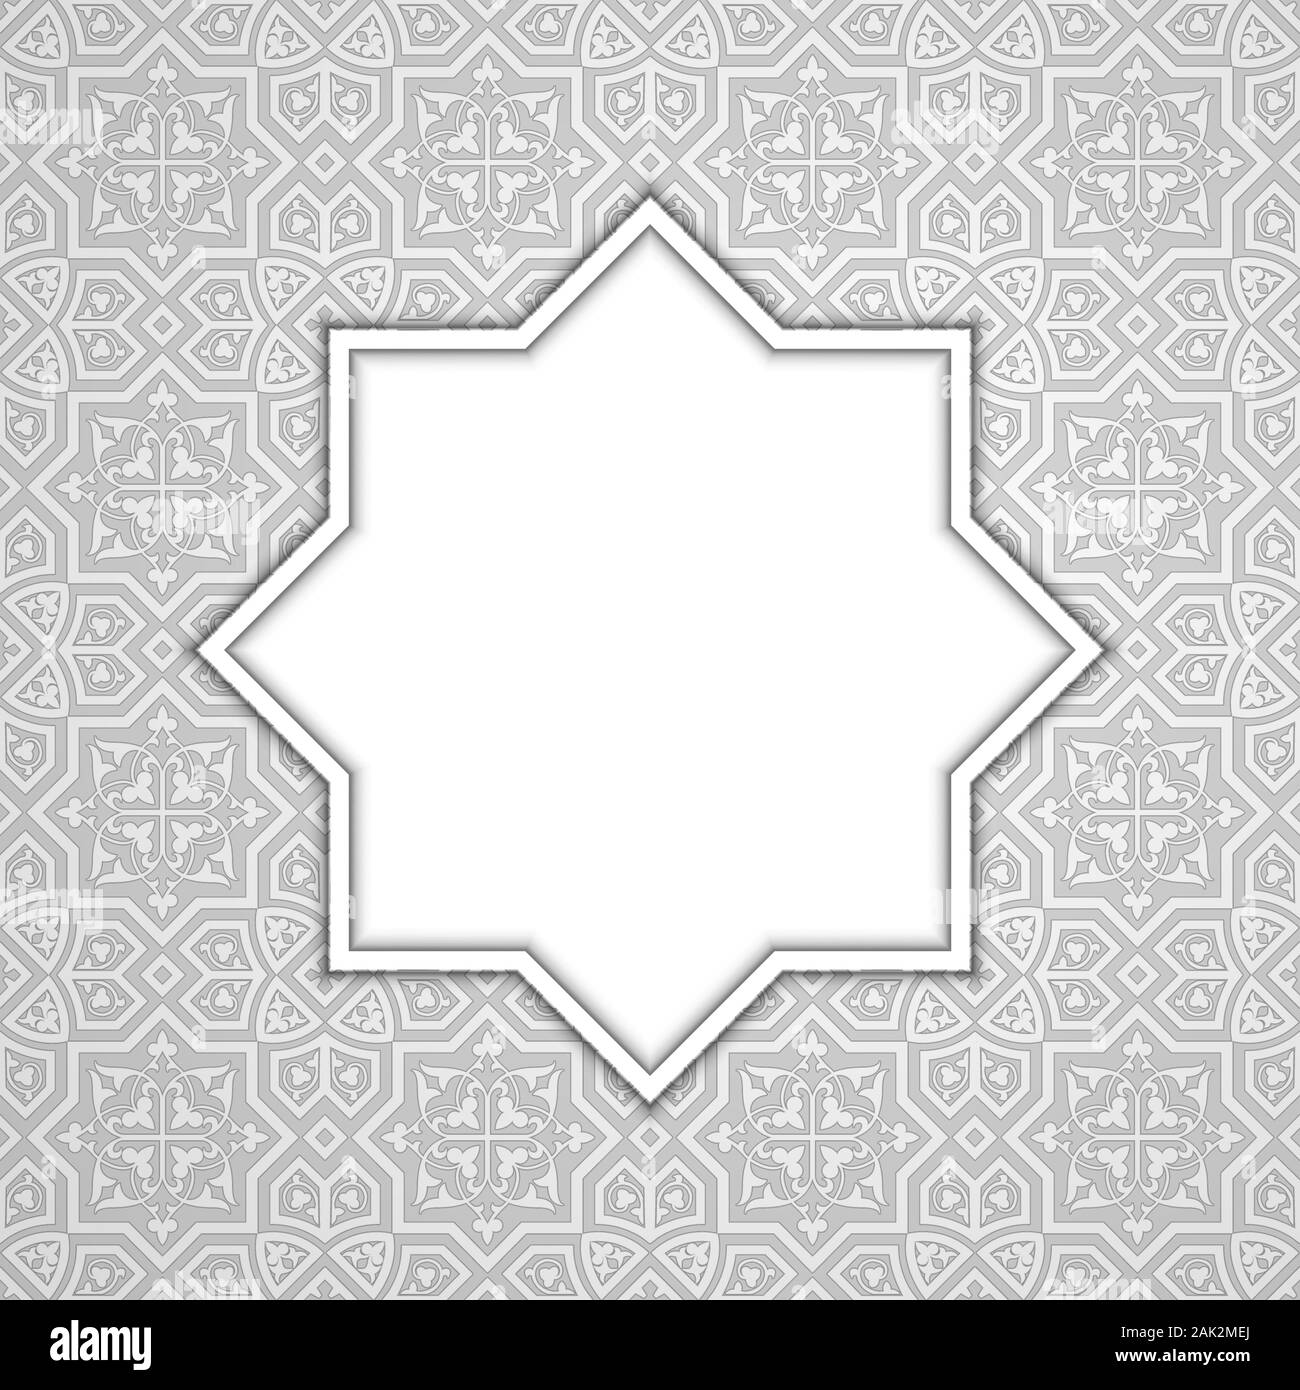 Islamische ornament Vector, traditionelle arabische Kunst, islamische Geometrische kreisförmige Zierpflanzen. Für Gewebe, Textil, Verpackung Papier - Abstrakt vector Bac Stock Vektor